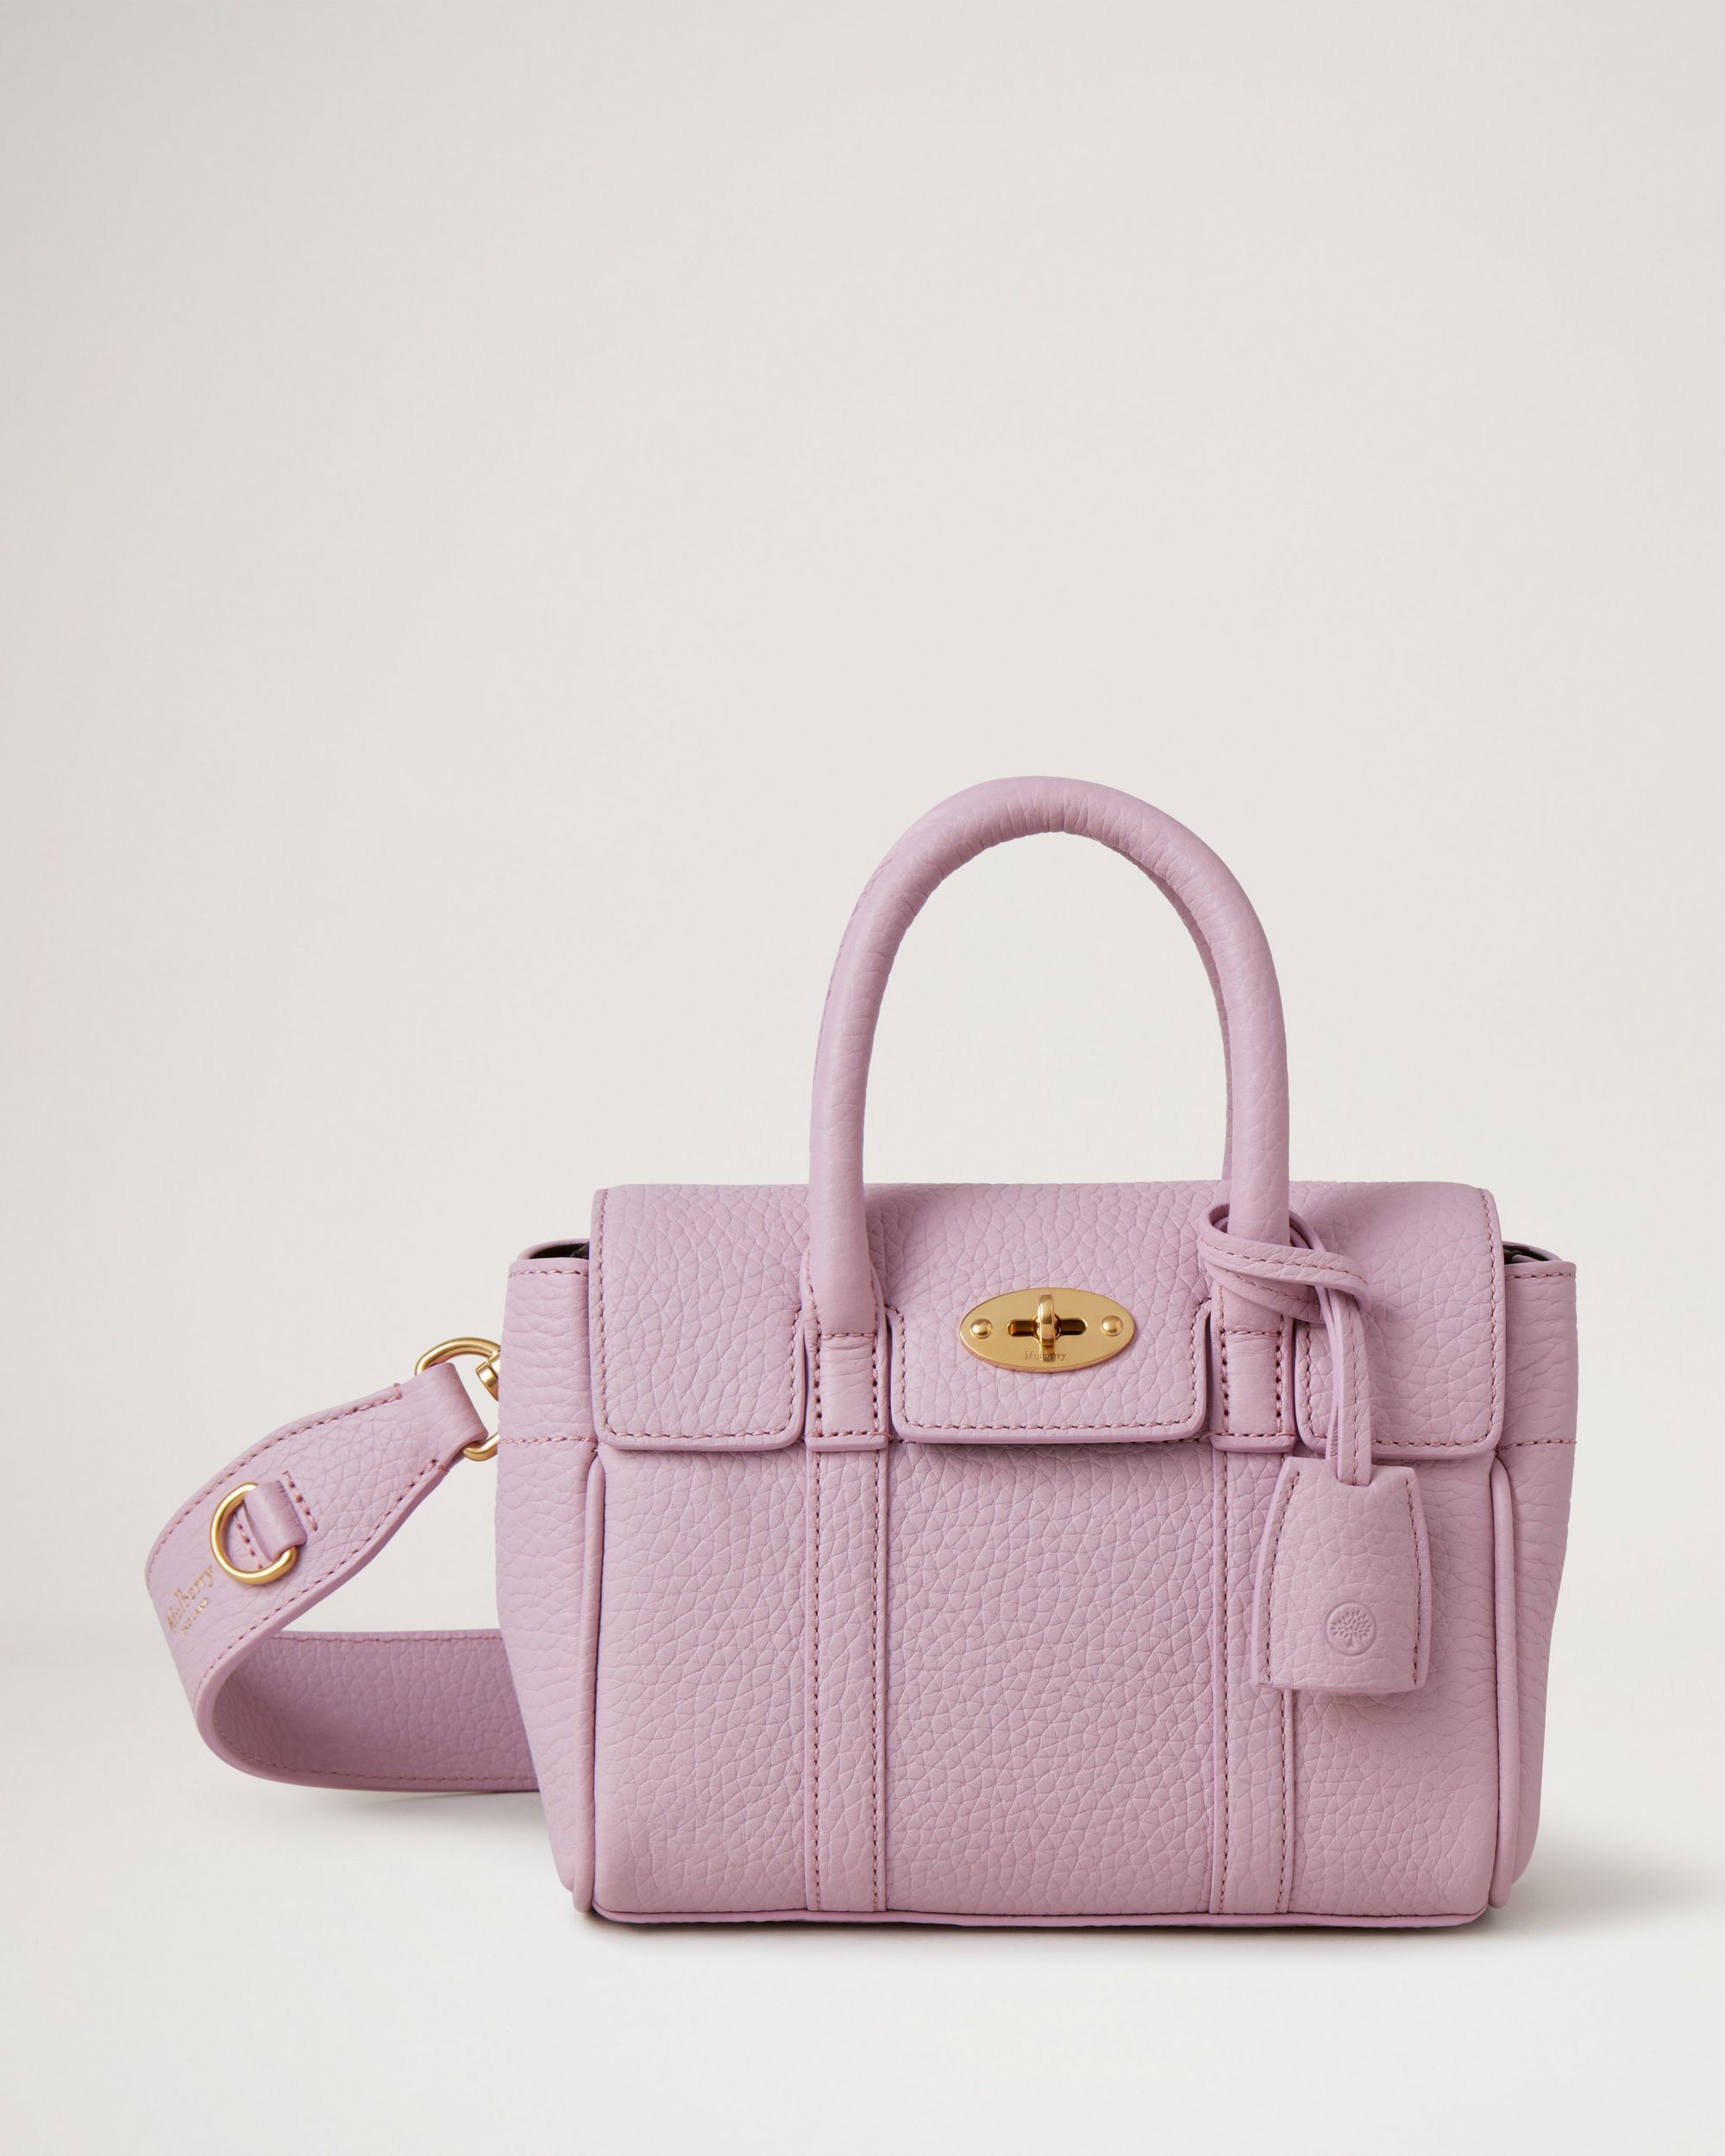 Lilac luxury handbag with brass finish